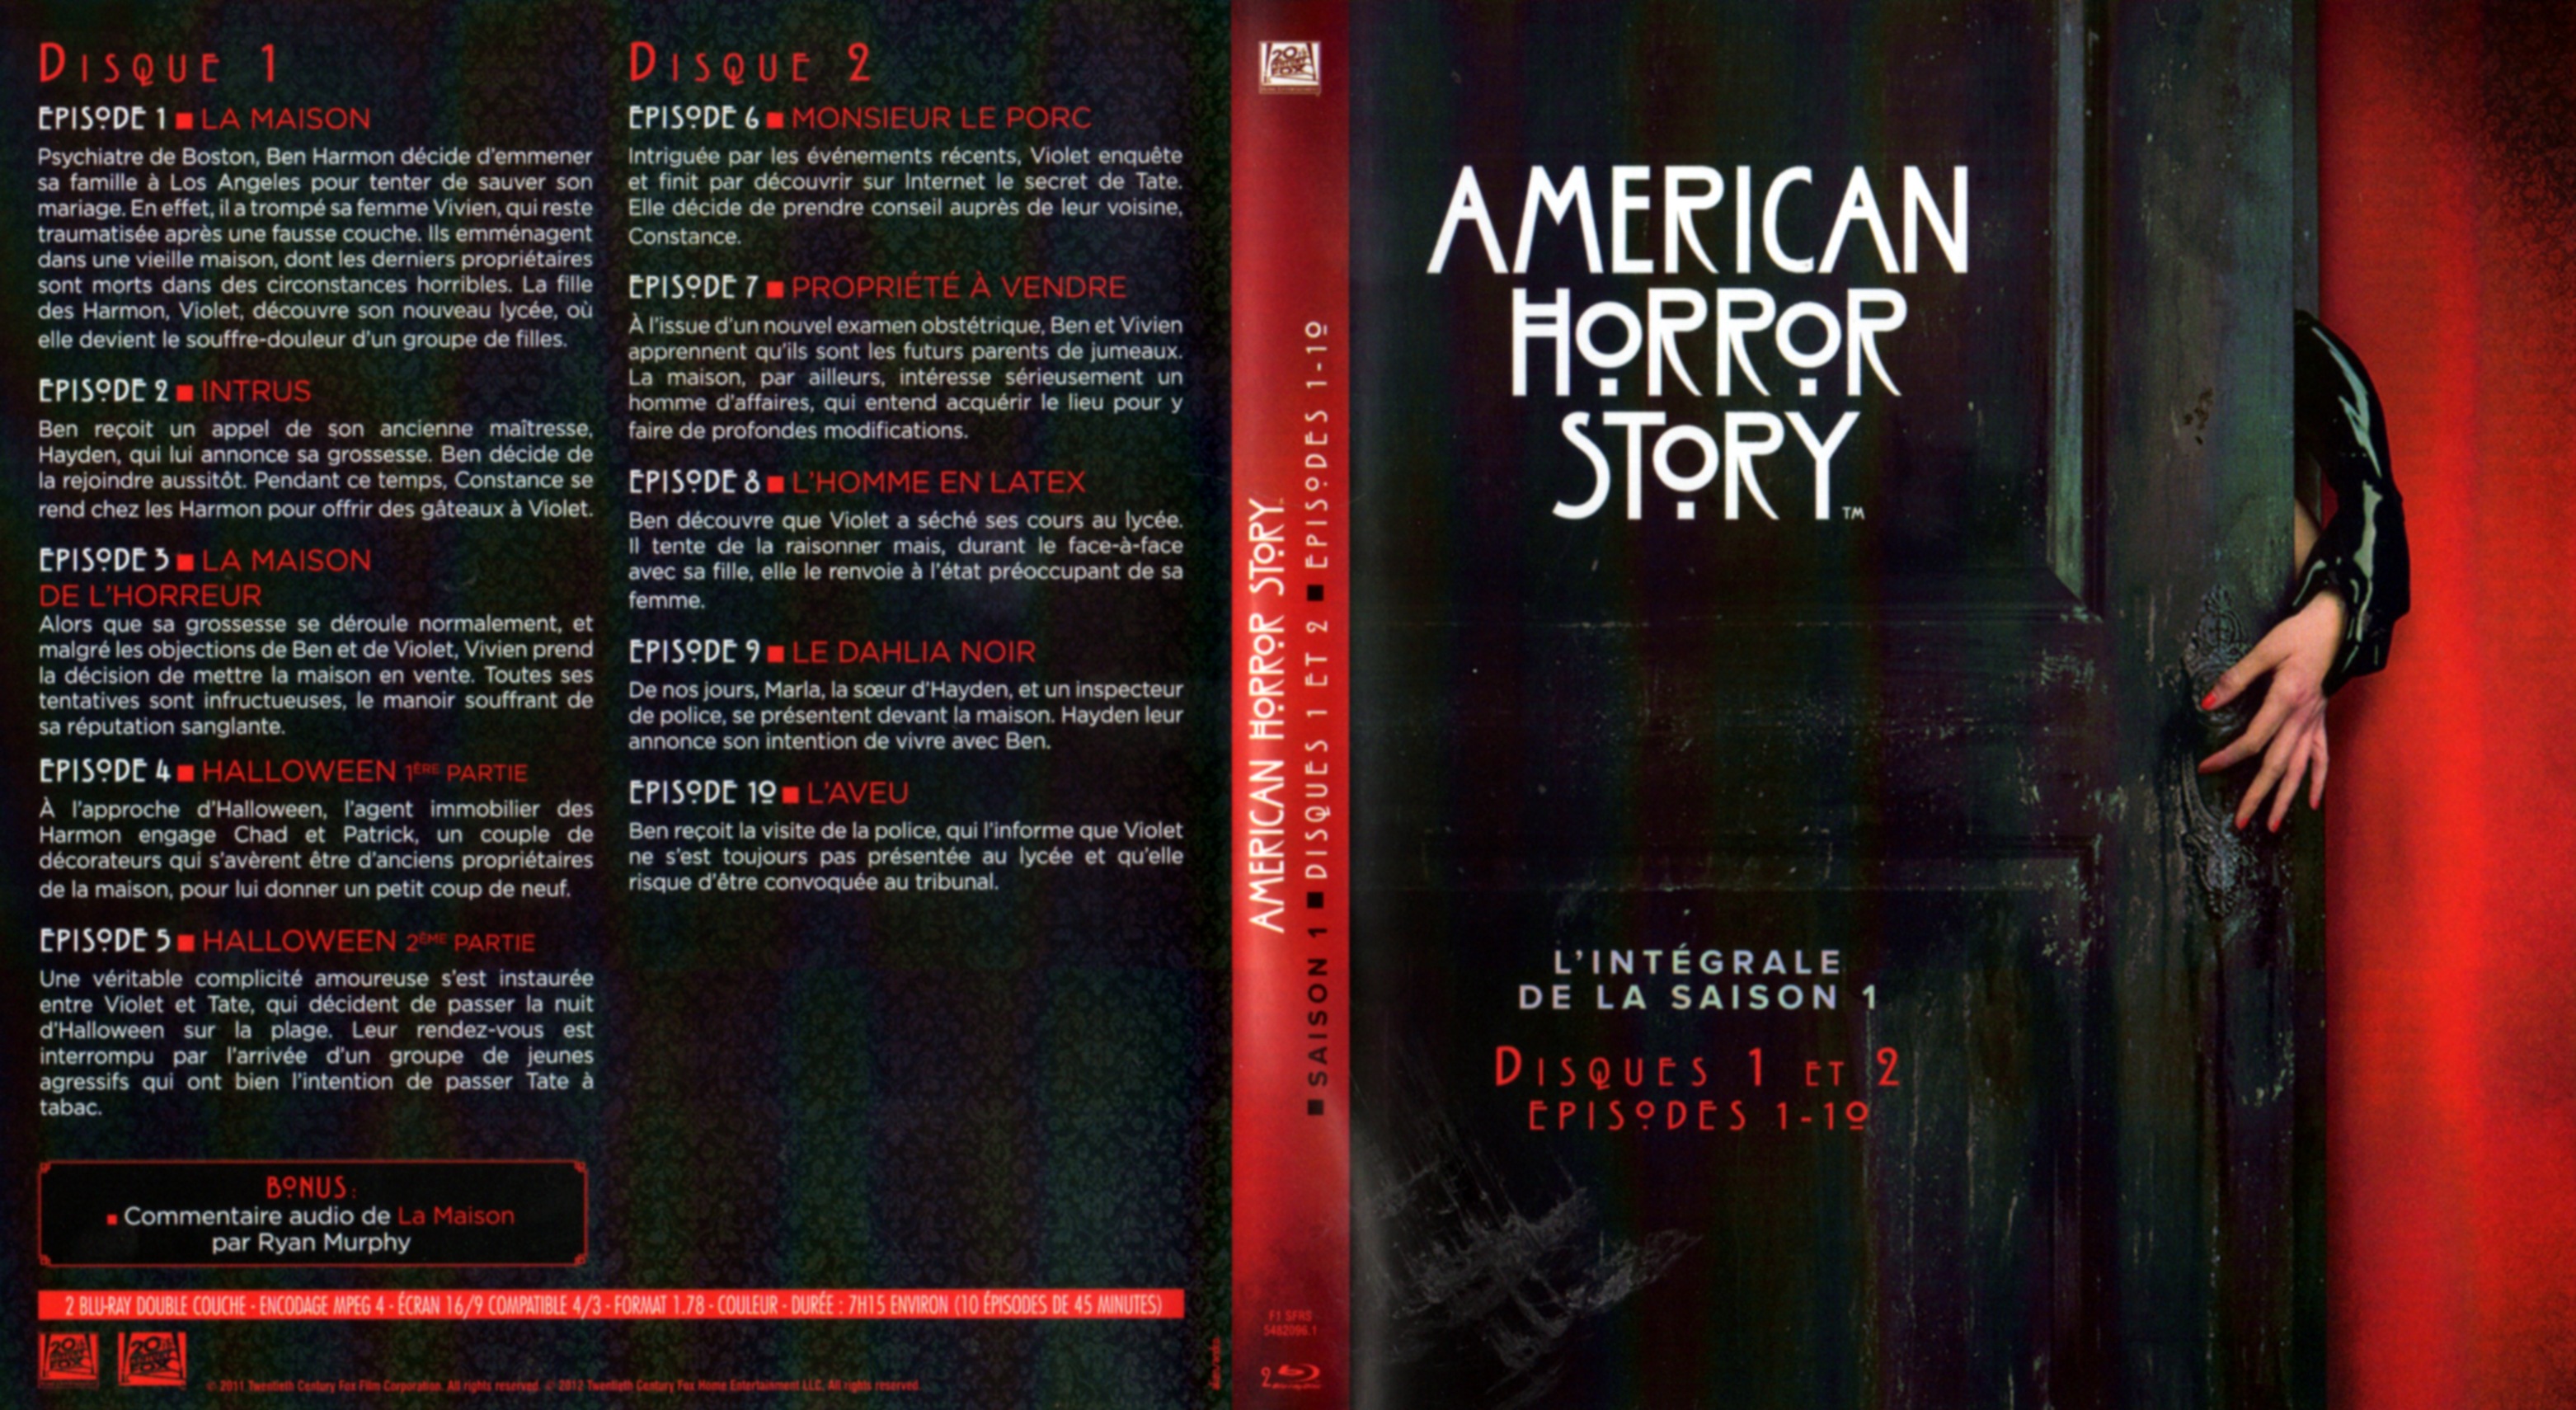 Jaquette DVD American horror story Saison 1 DVD 1 (BLU-RAY)